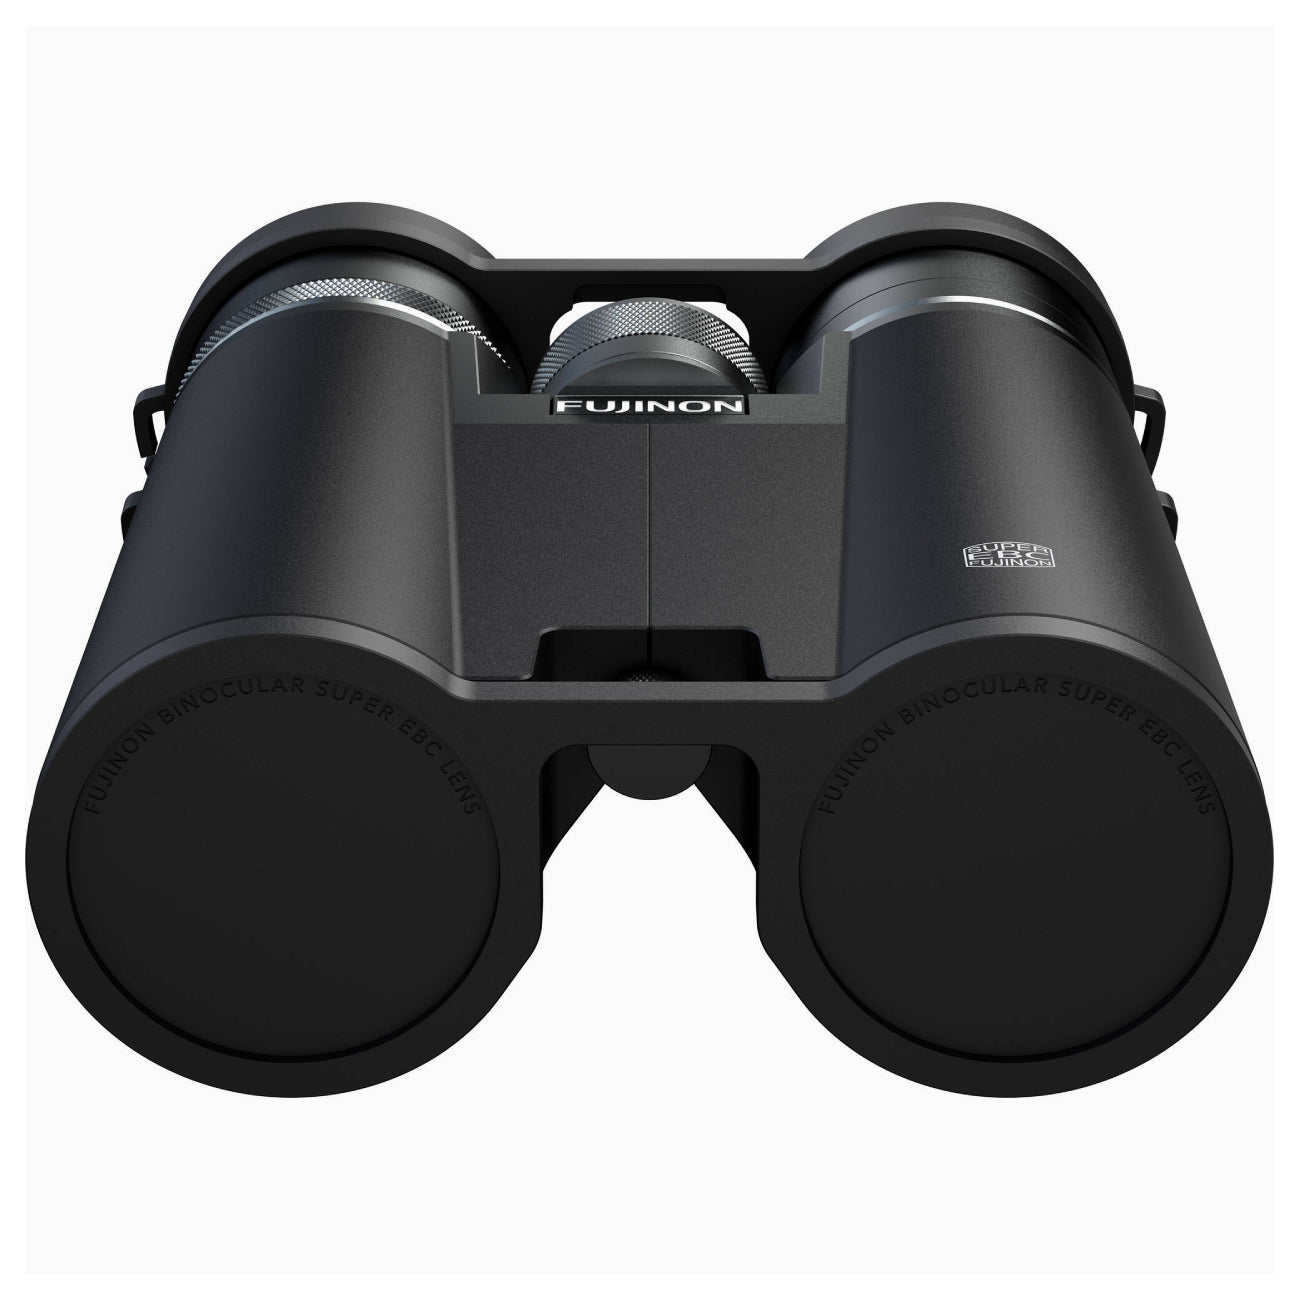 Fujinon 8x42 Hyper Clarity Binoculars / high power binoculars, long range binoculars, birding binoculars